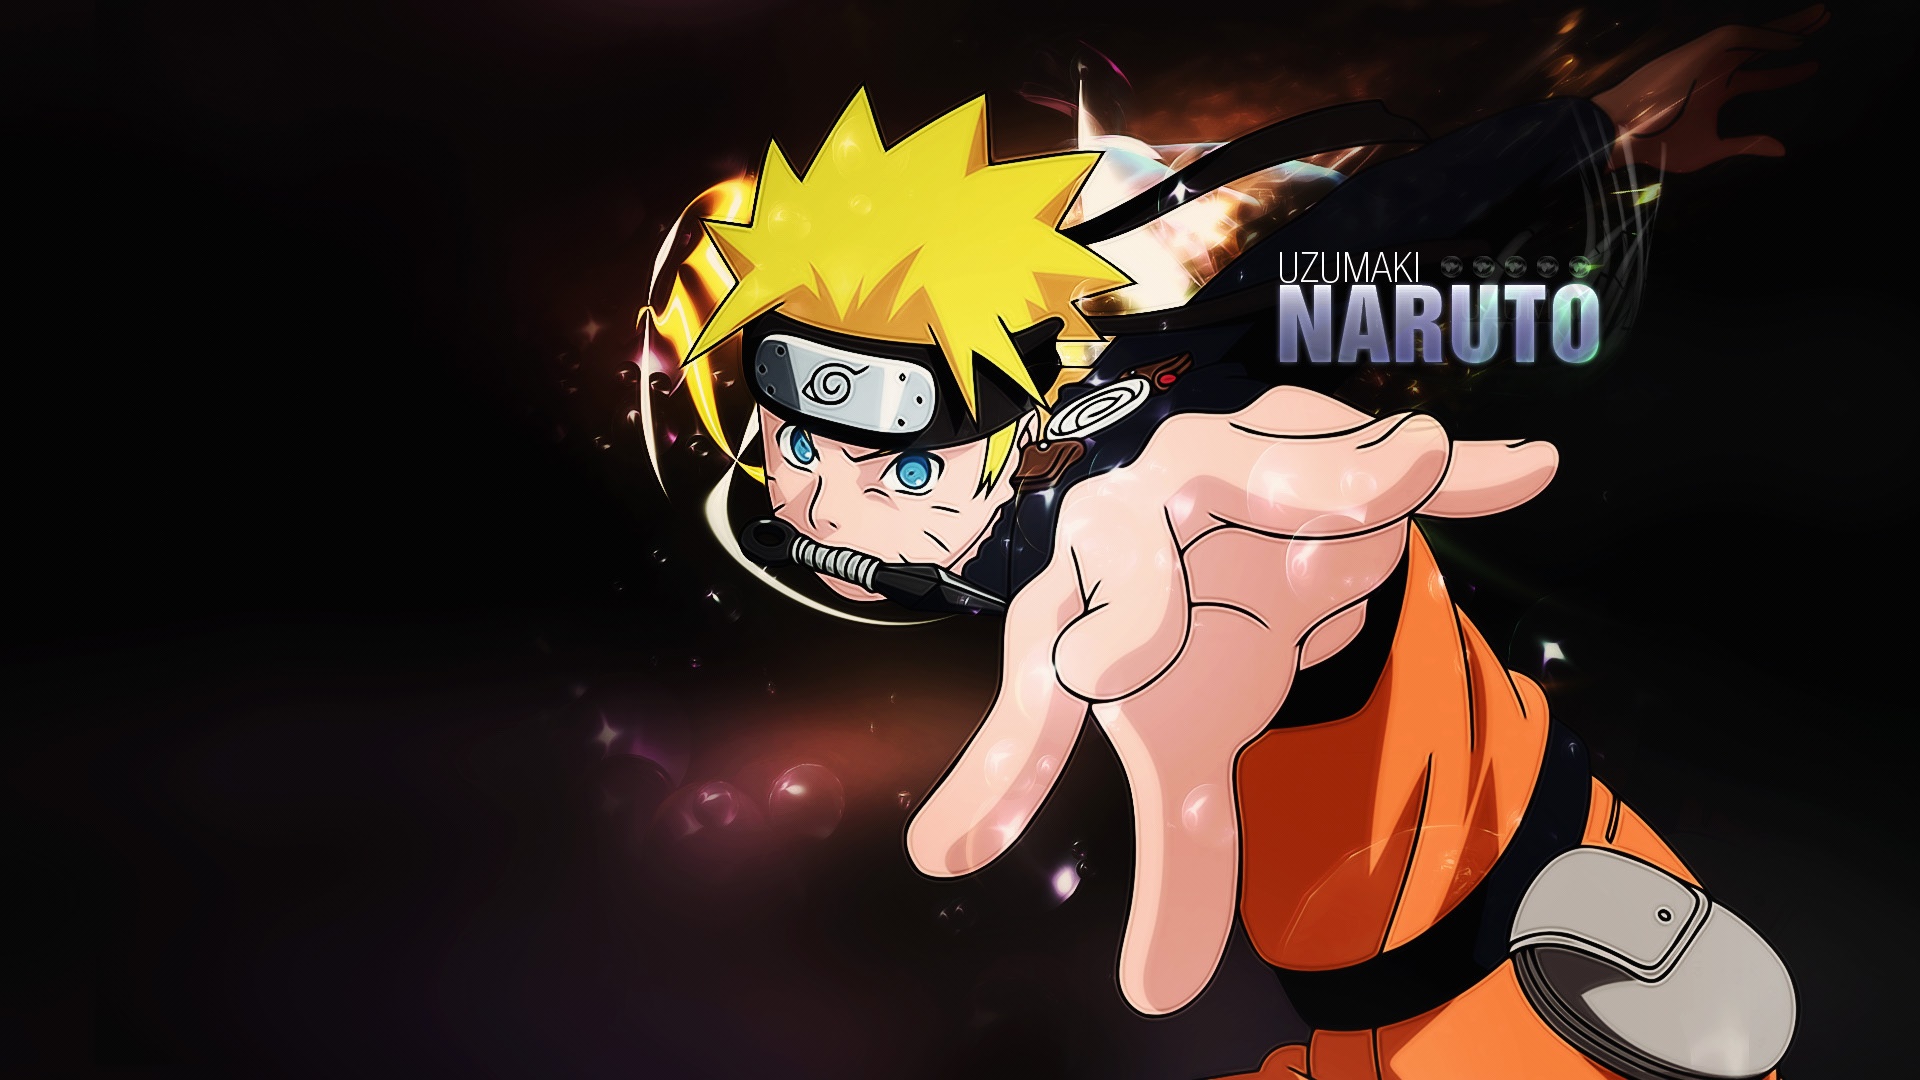 63 Gambar Keren Anime Naruto Shippuden Gratis Terbaru